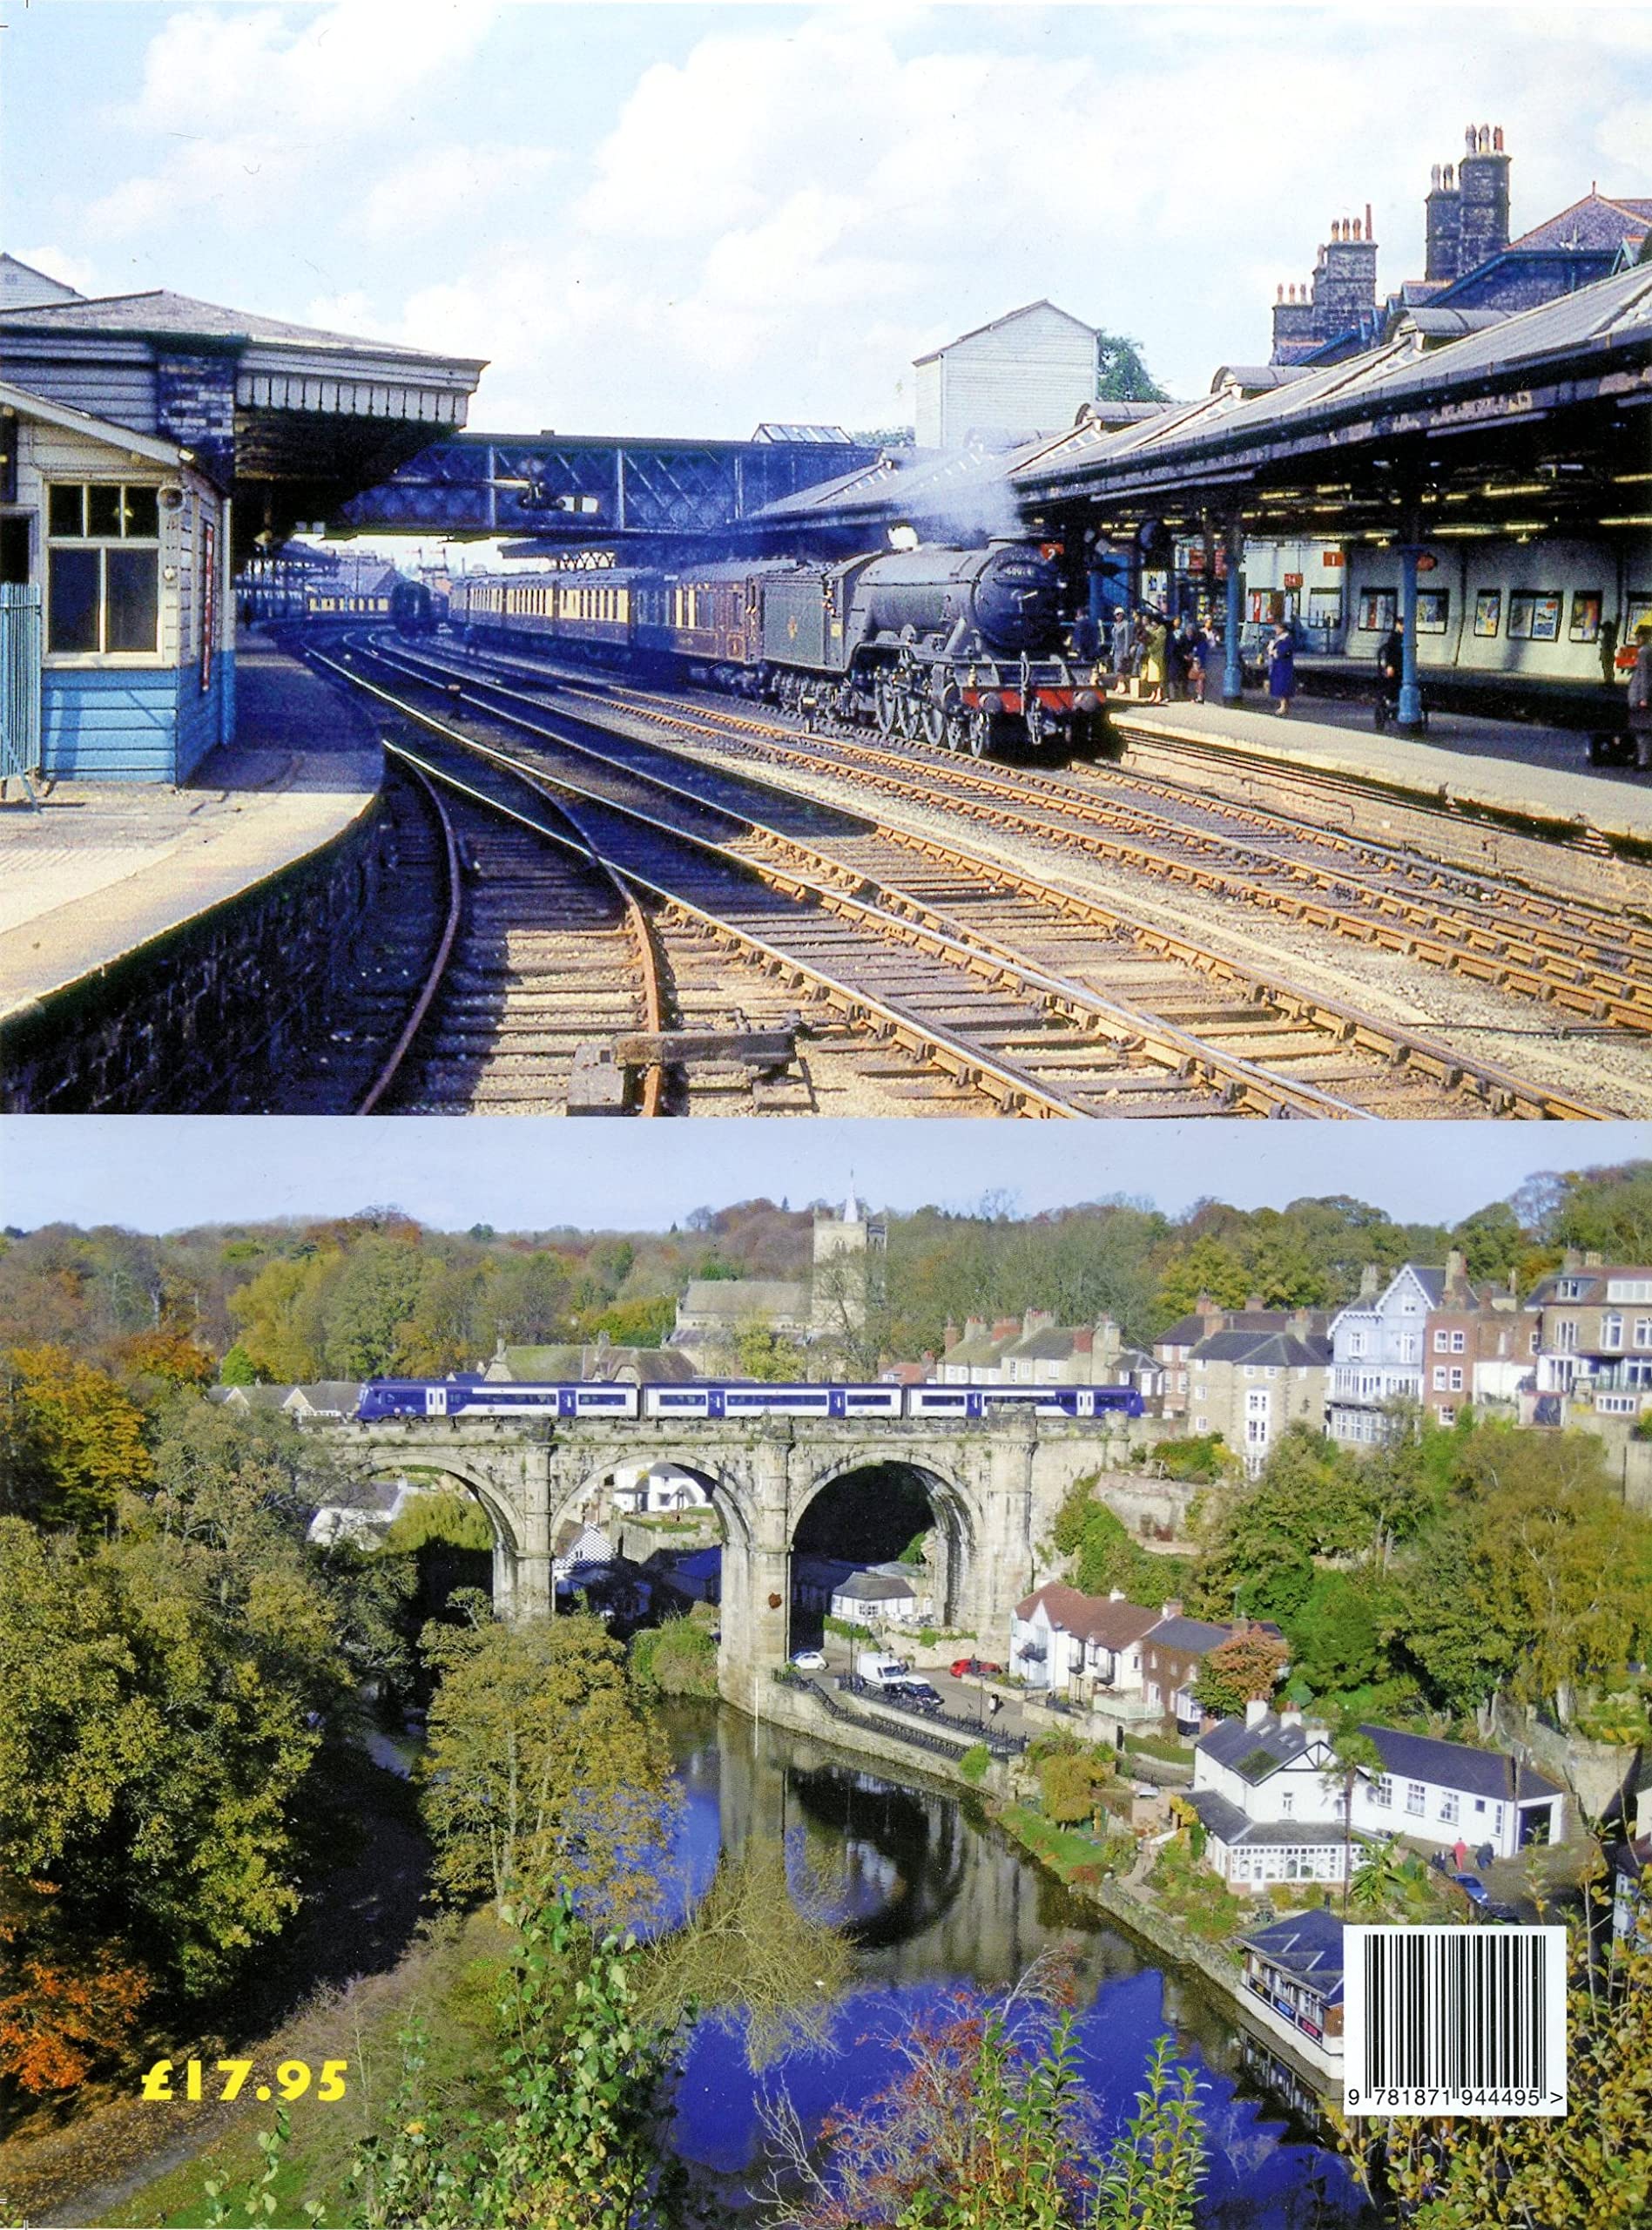 Railways Through Harrogate